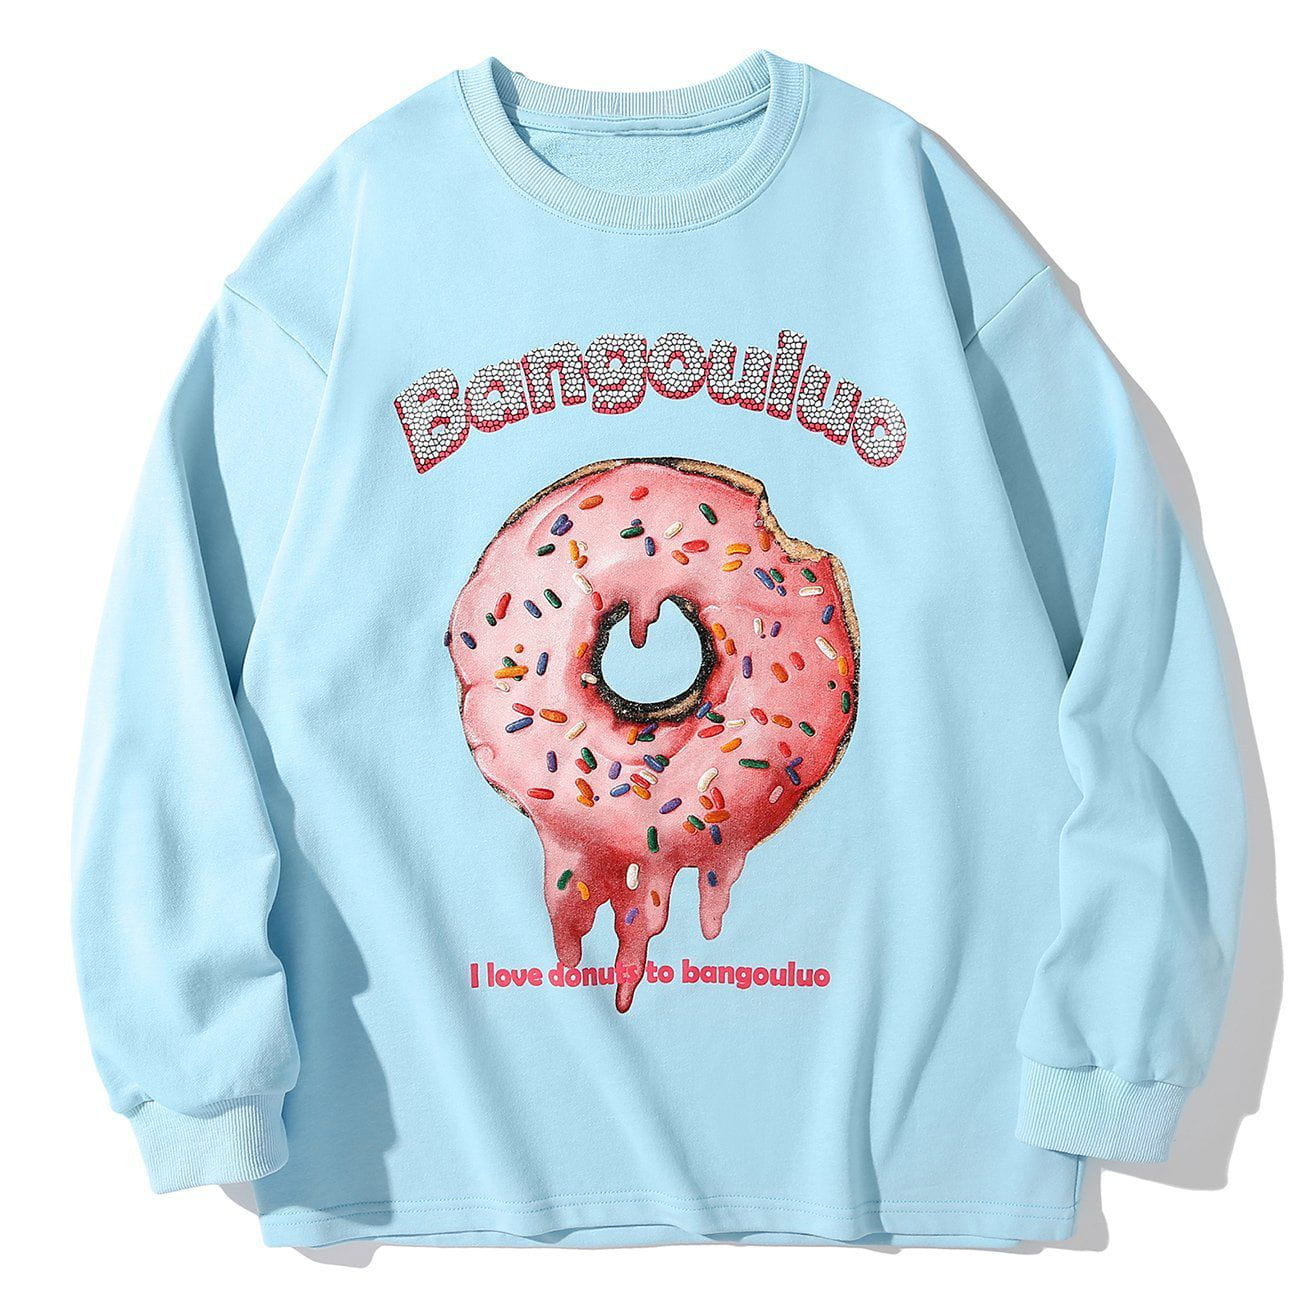 LUXENFY™ - Cartoon Donuts Print Sweatshirt luxenfy.com